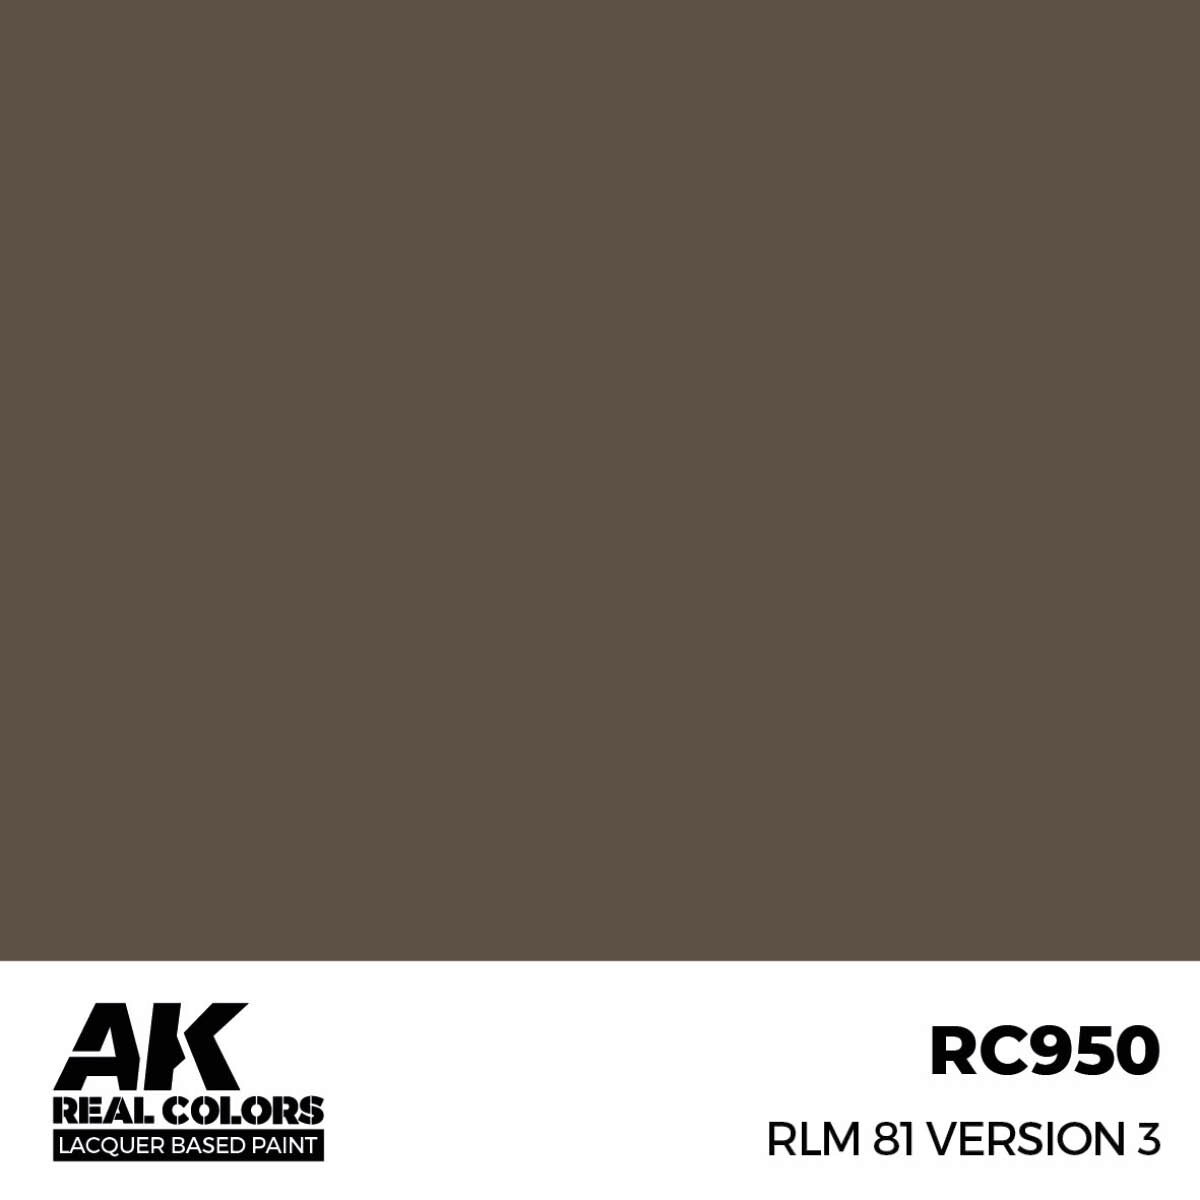 AK RC950 Real Colors RLM 81 Version 3 17 ml.